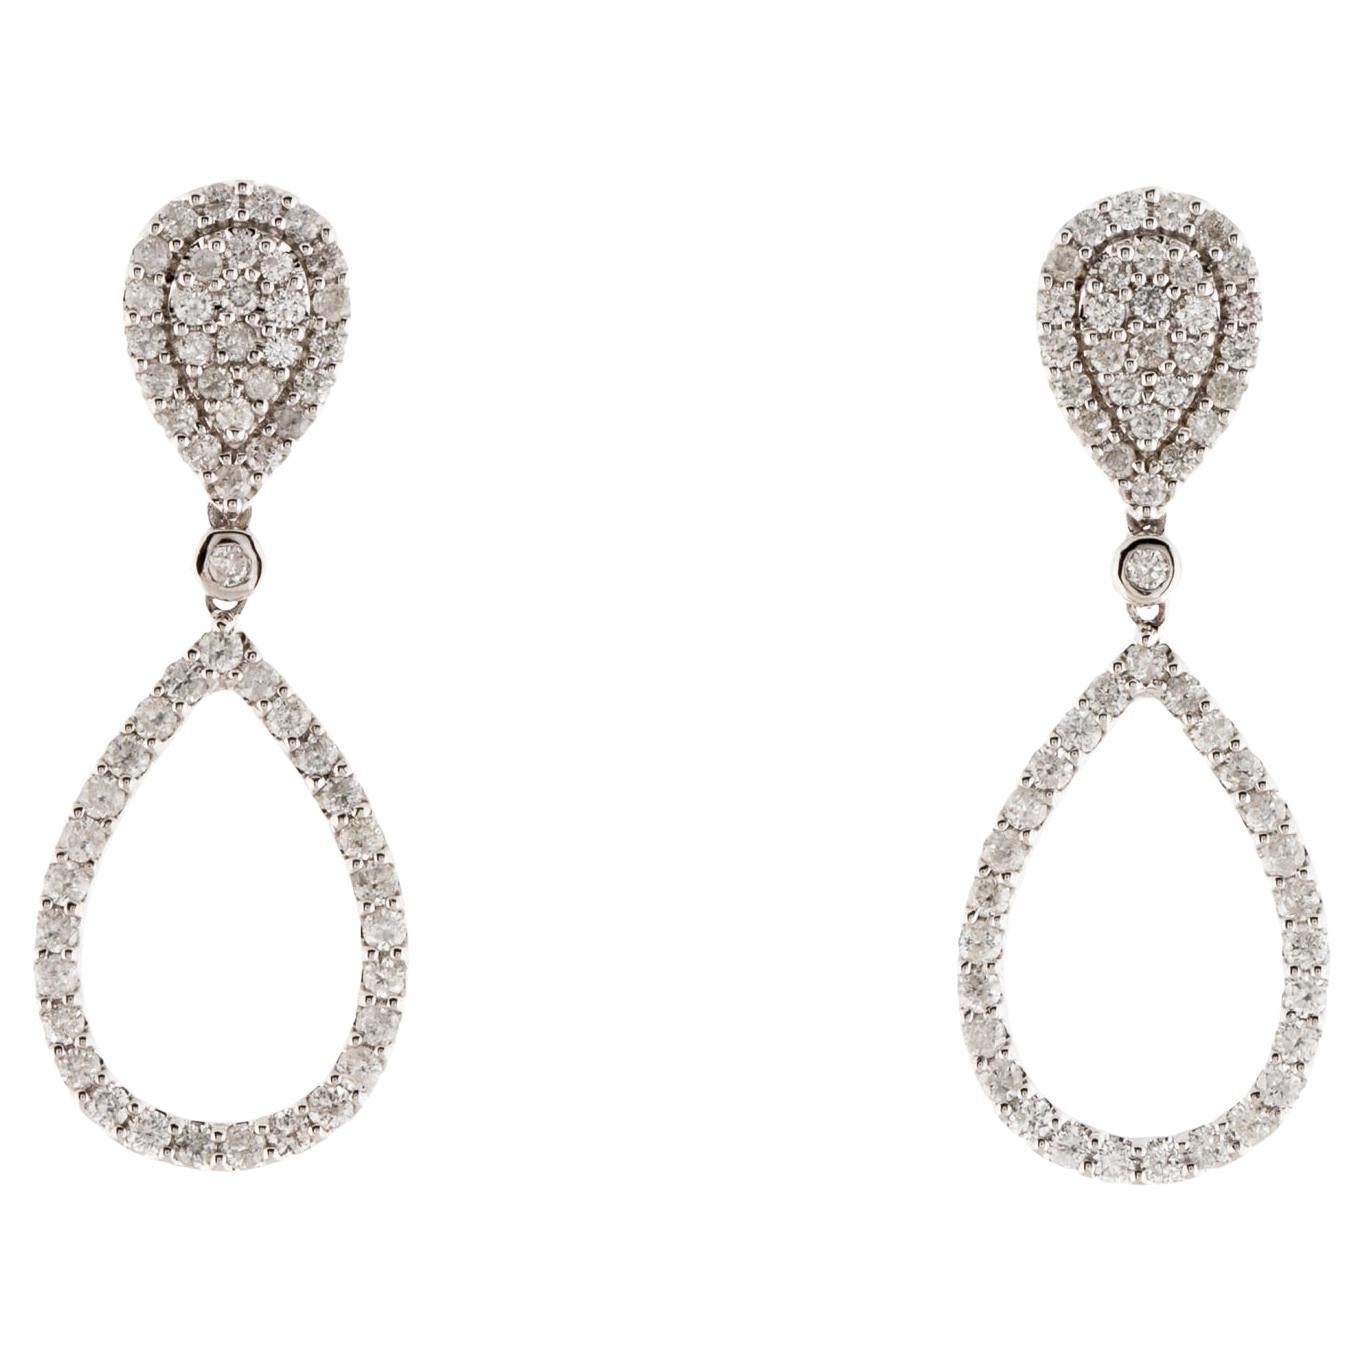 Exquisite 14K Diamond Drop Earrings - 1.40ctw Radiant Beauty & Luxury For Sale